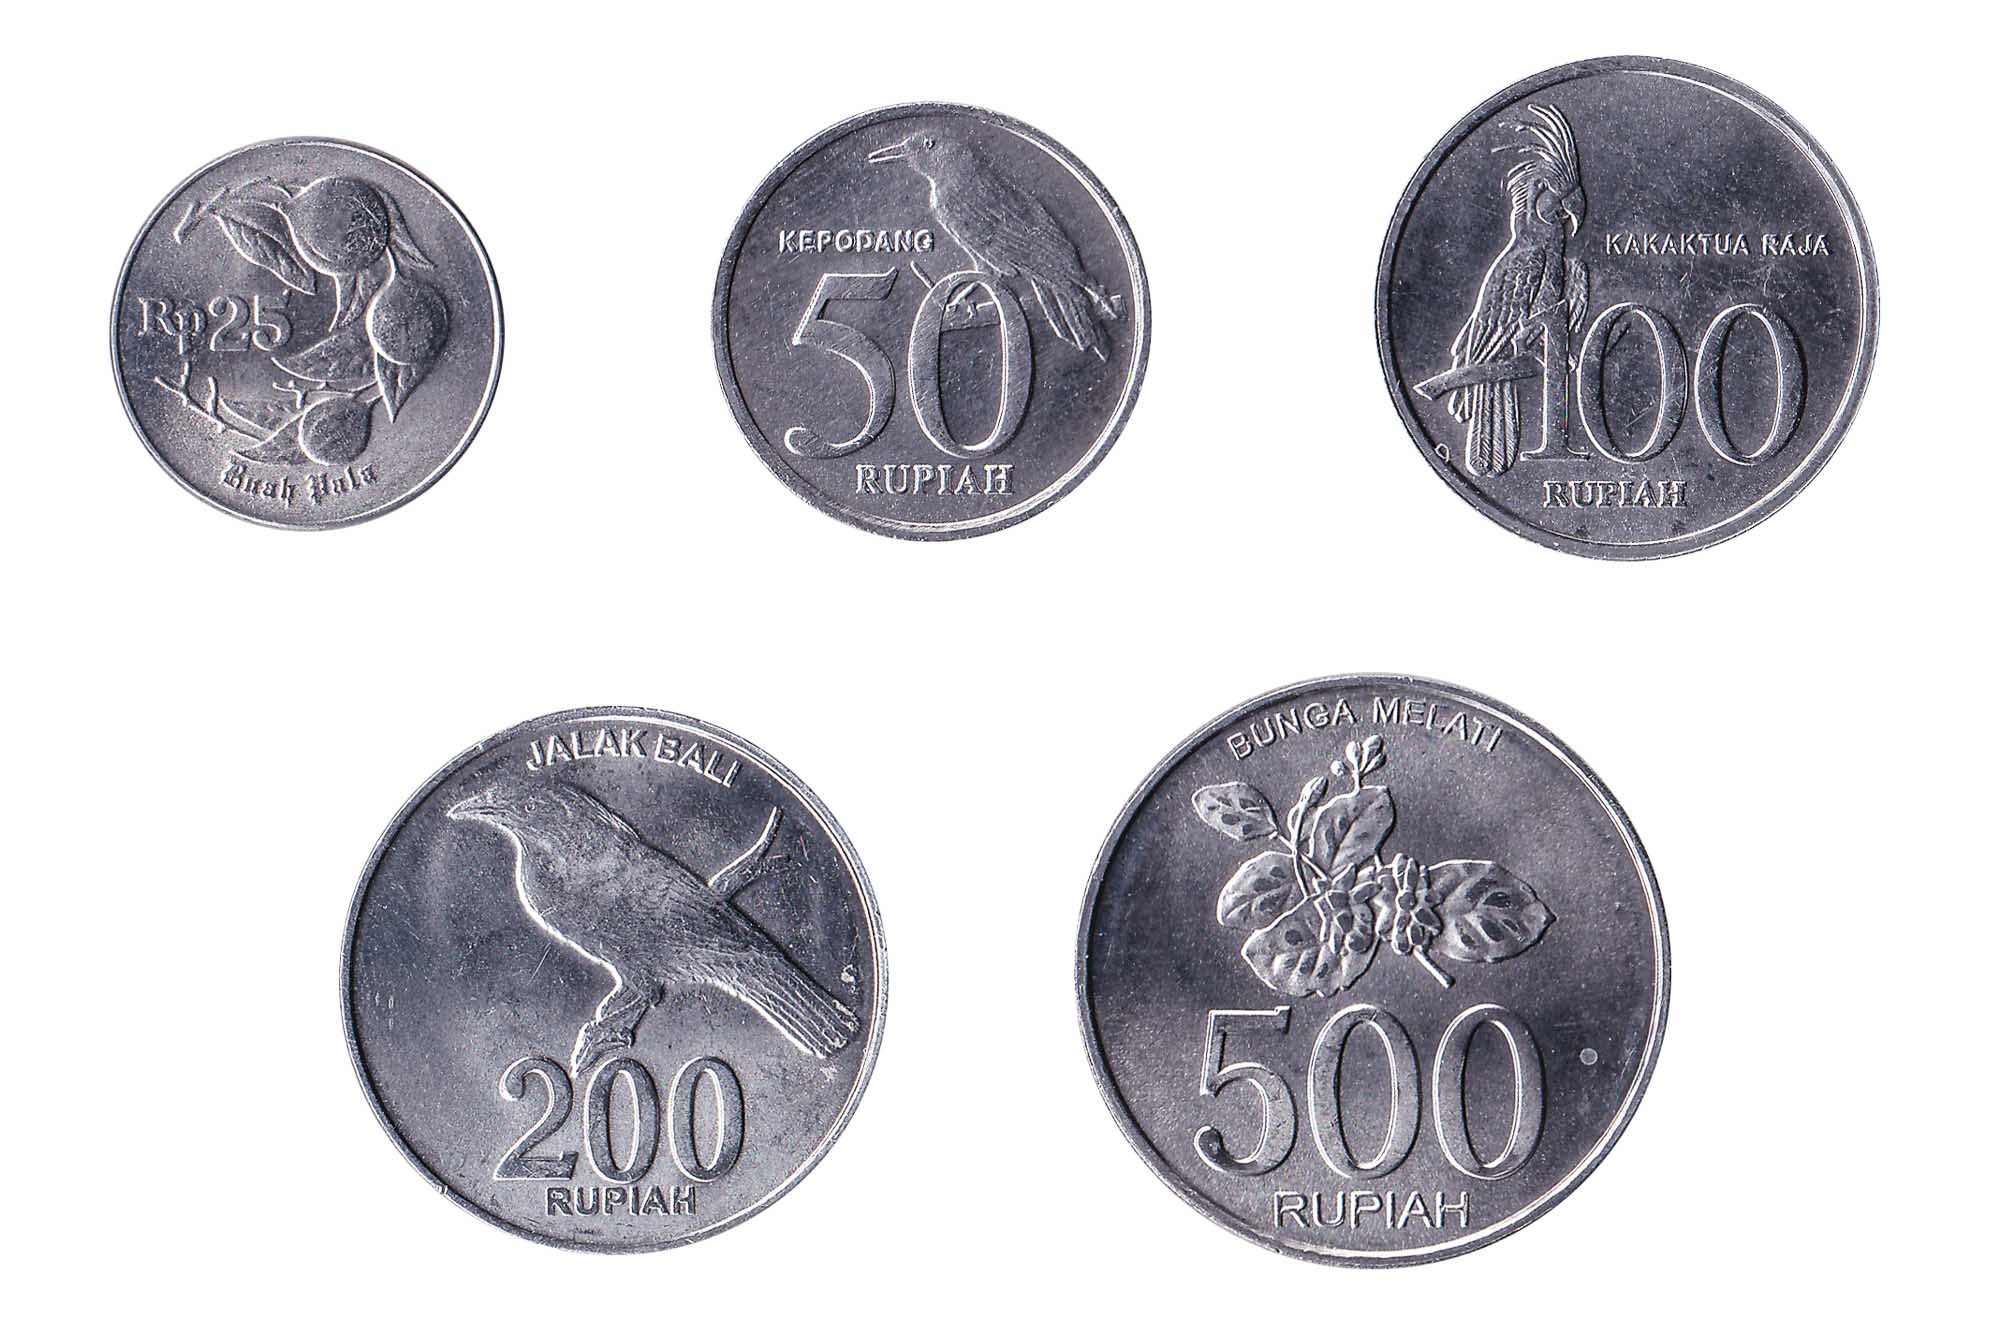 Indonesian rupiah coins